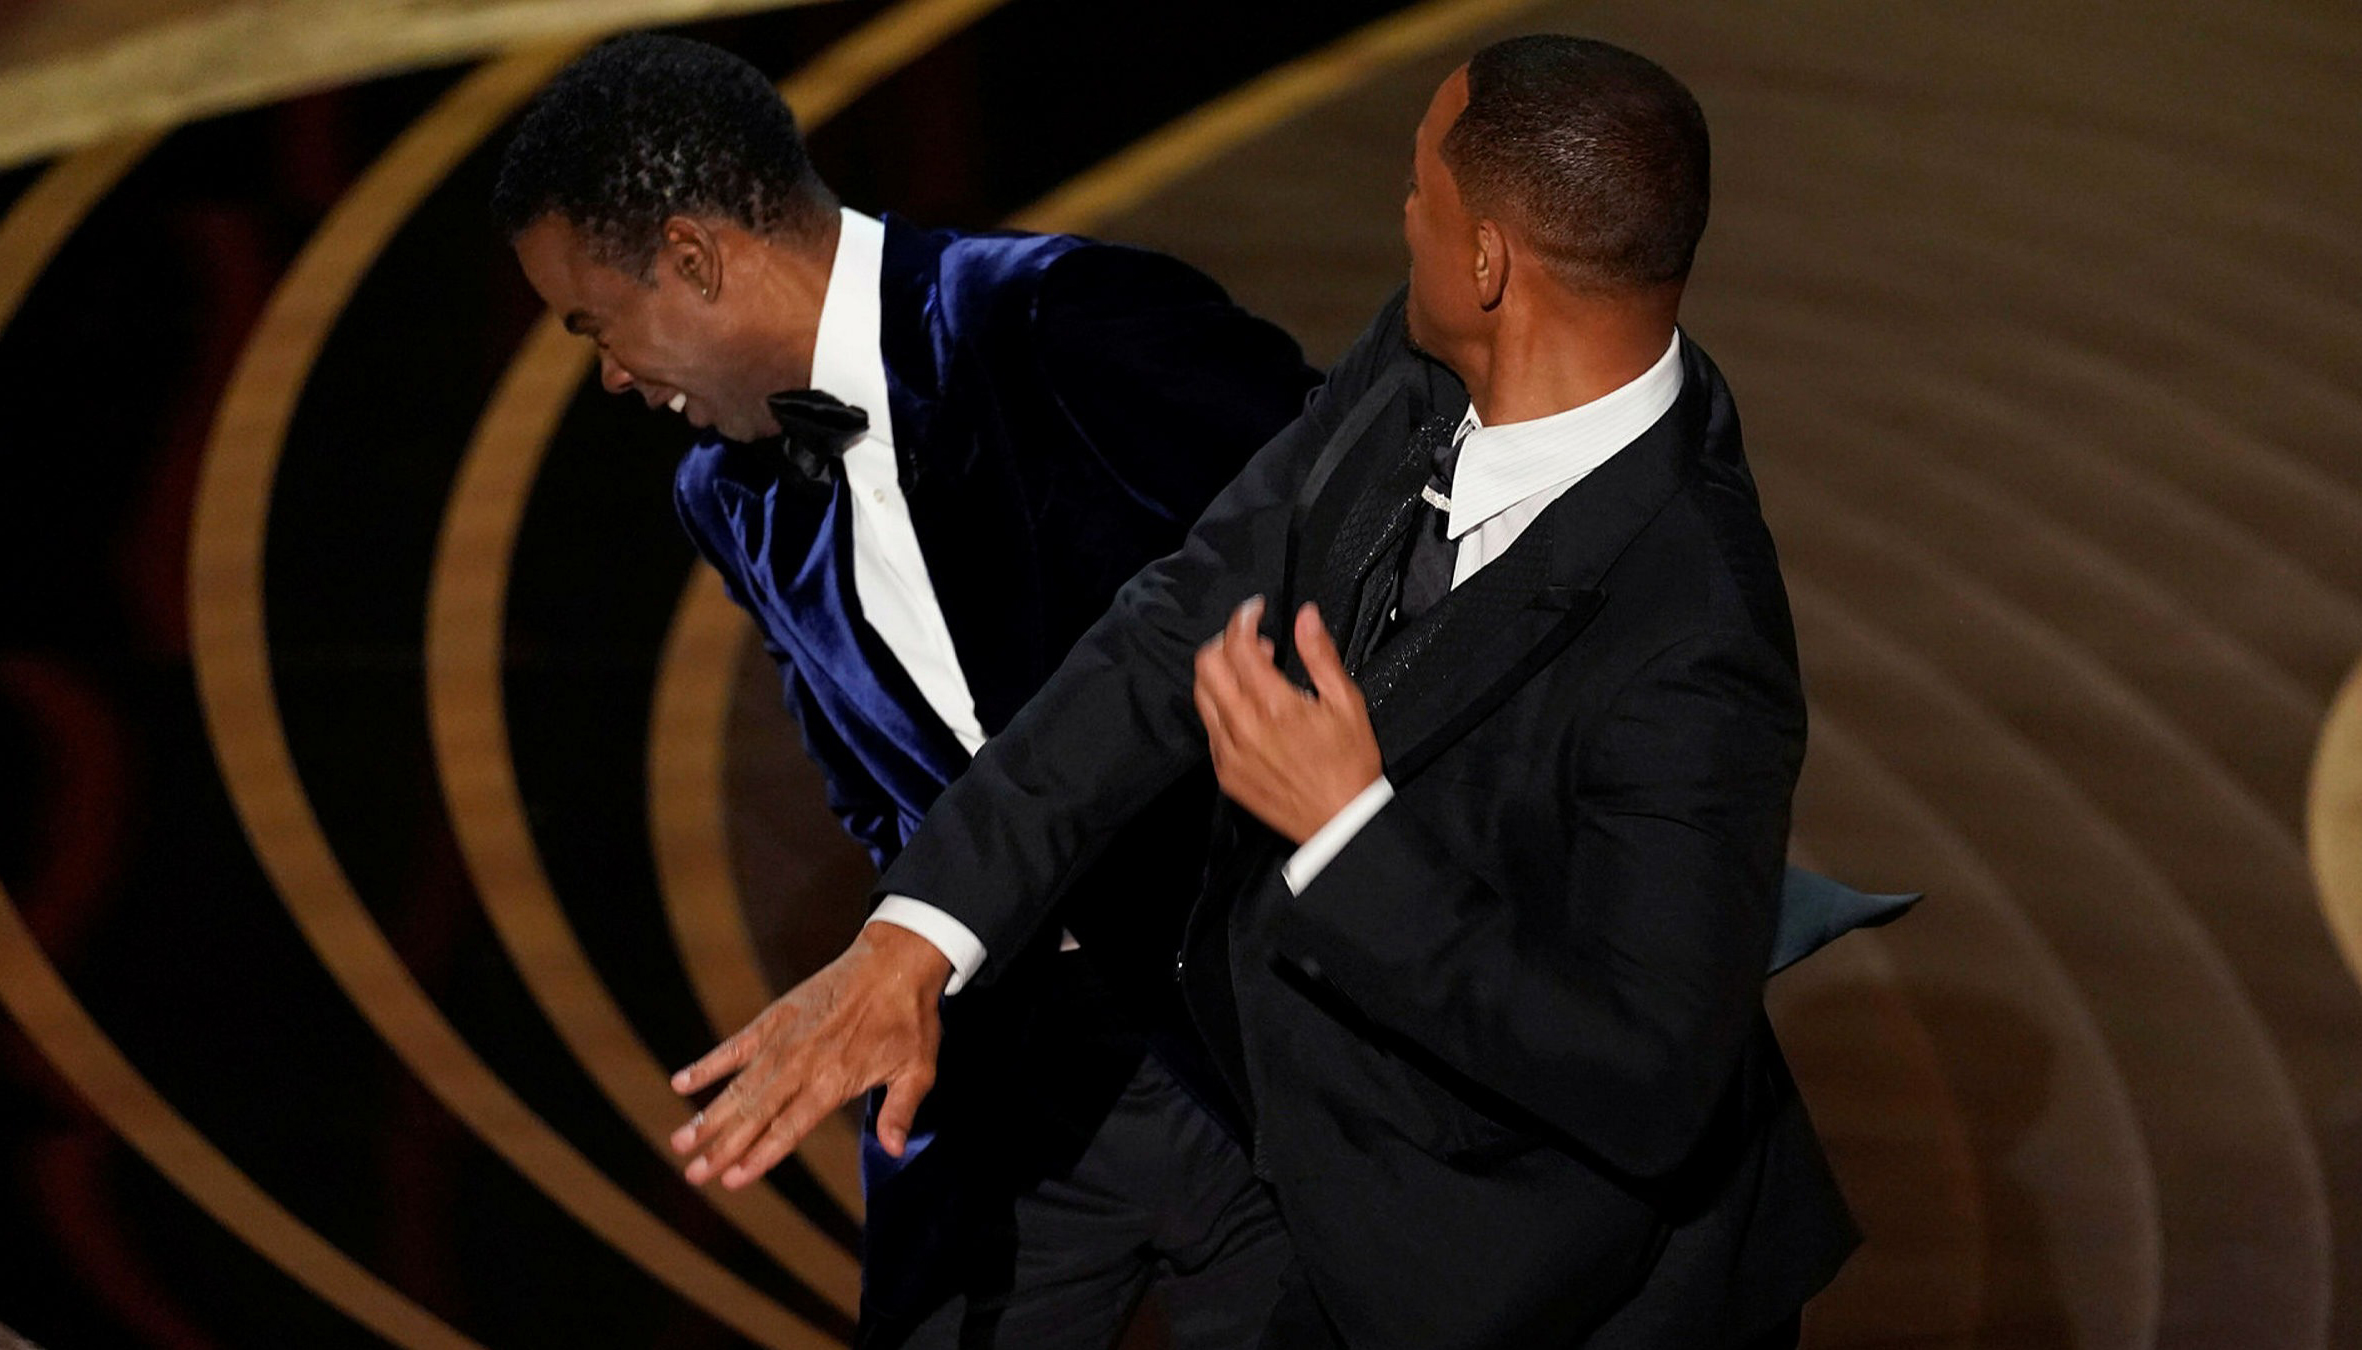 Will Smith's popularity faces 'precipitous' decline following Oscars slap